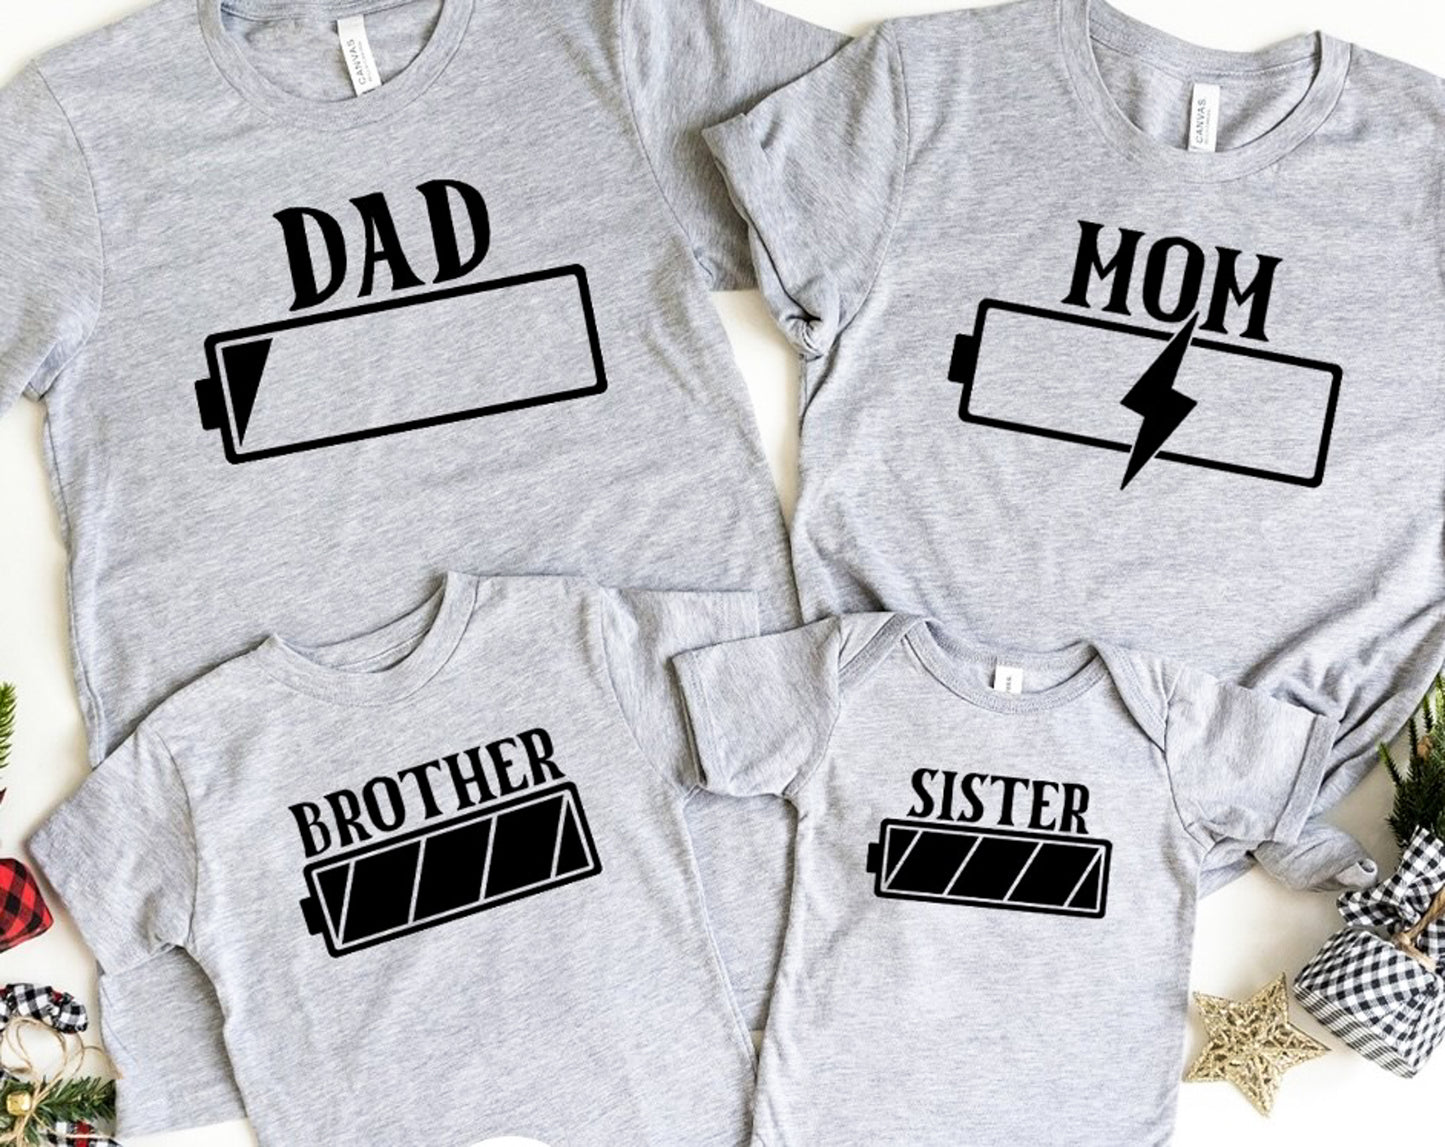 Dad Battery Life T-Shirt or Crew Sweatshirt